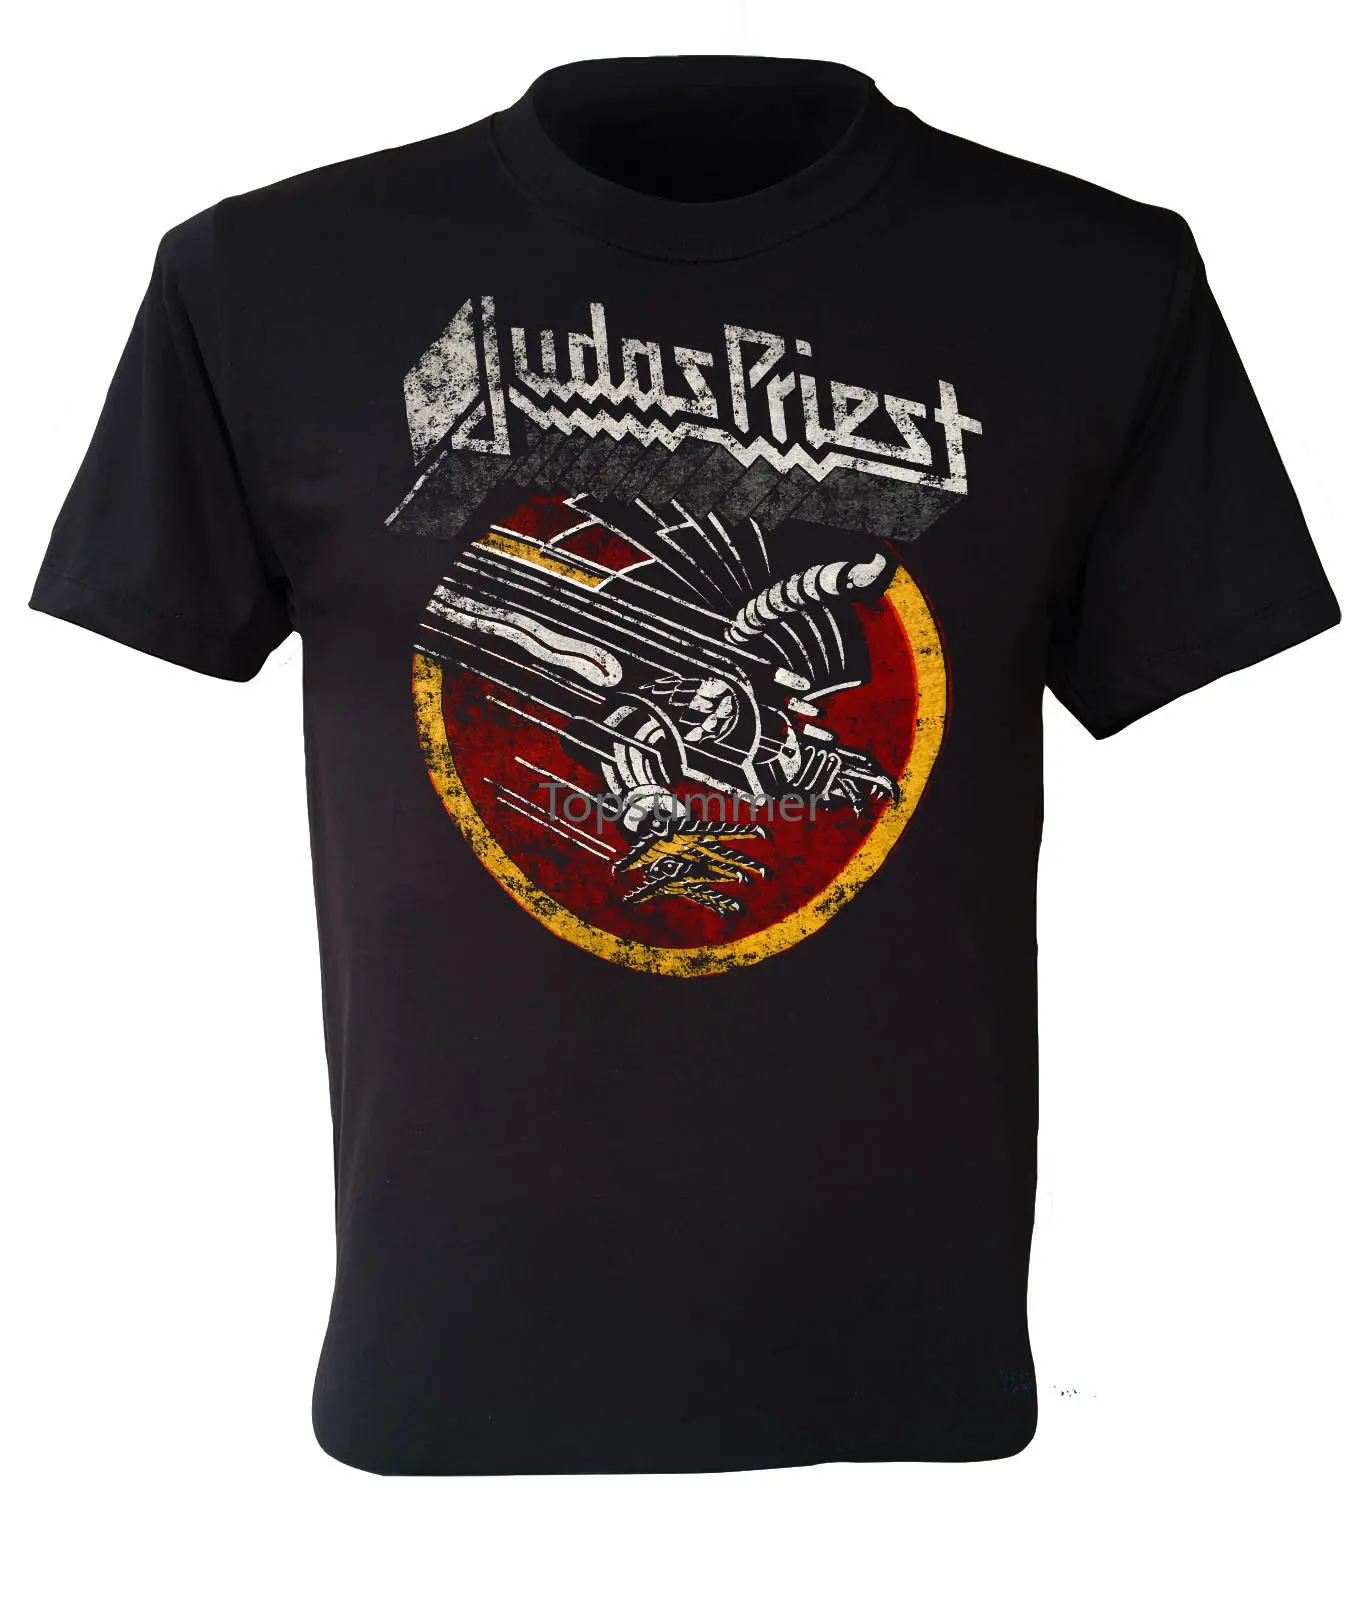 

Judas Priest T-Shirt Screaming For Vengeance Uk Heavy Metal Band Black S To 3Xl Printed Men T Shirt Short Sleeve Funny